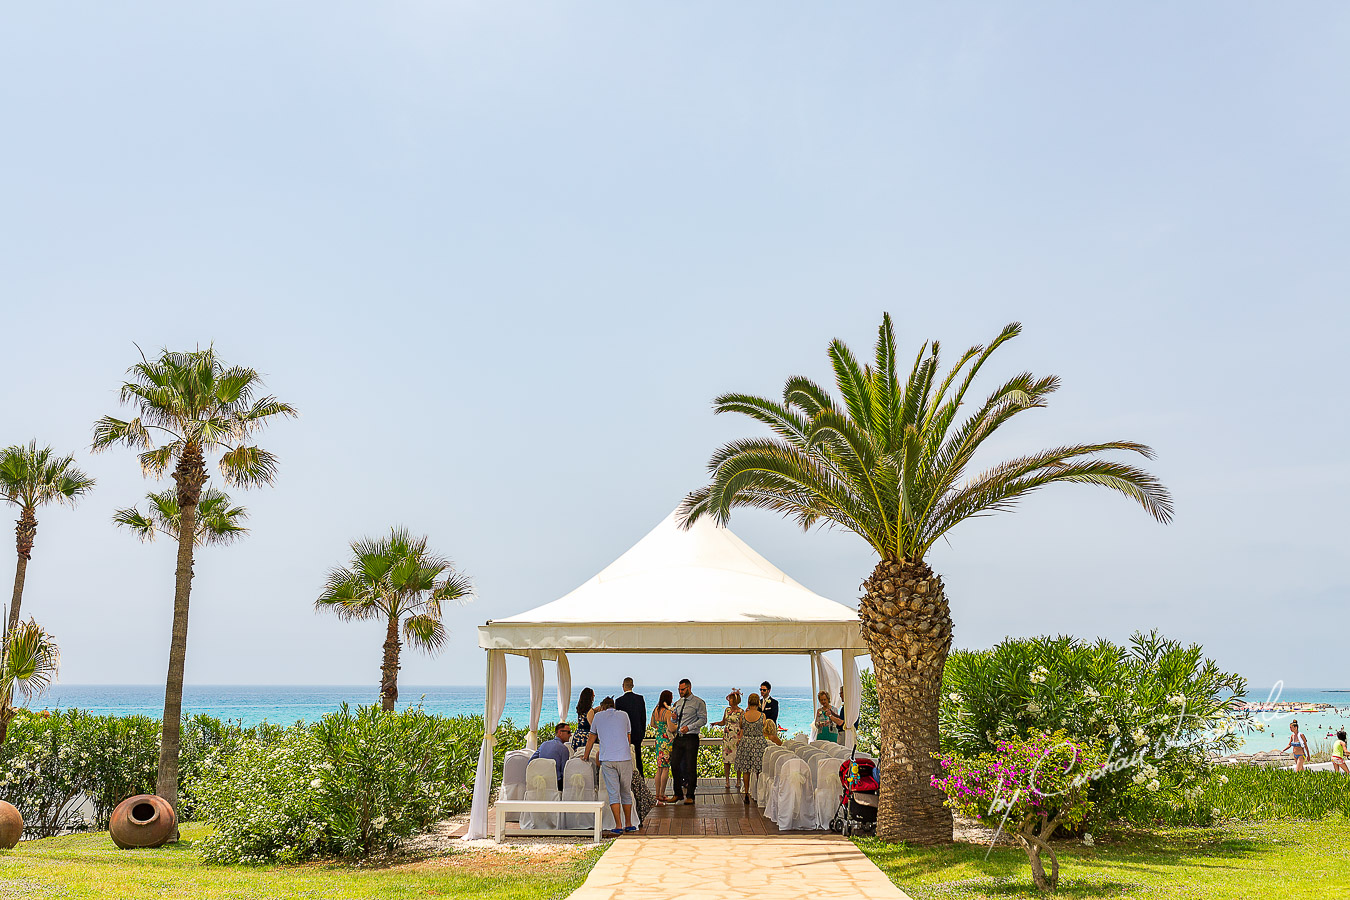 Wedding tent photographed at Nissi Beach Resort in Ayia Napa, Cyprus by Cristian Dascalu.